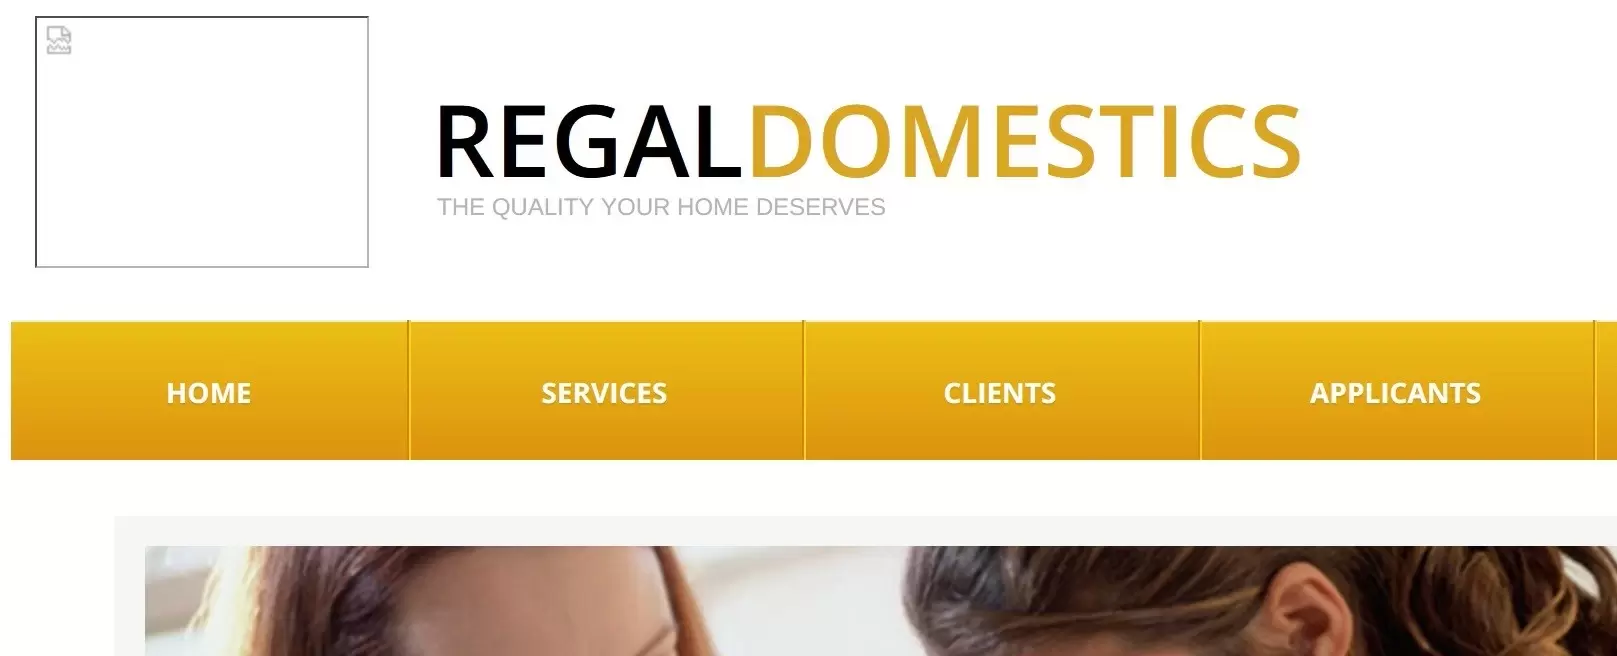 Regal Domestics Ltd company profile and reviews